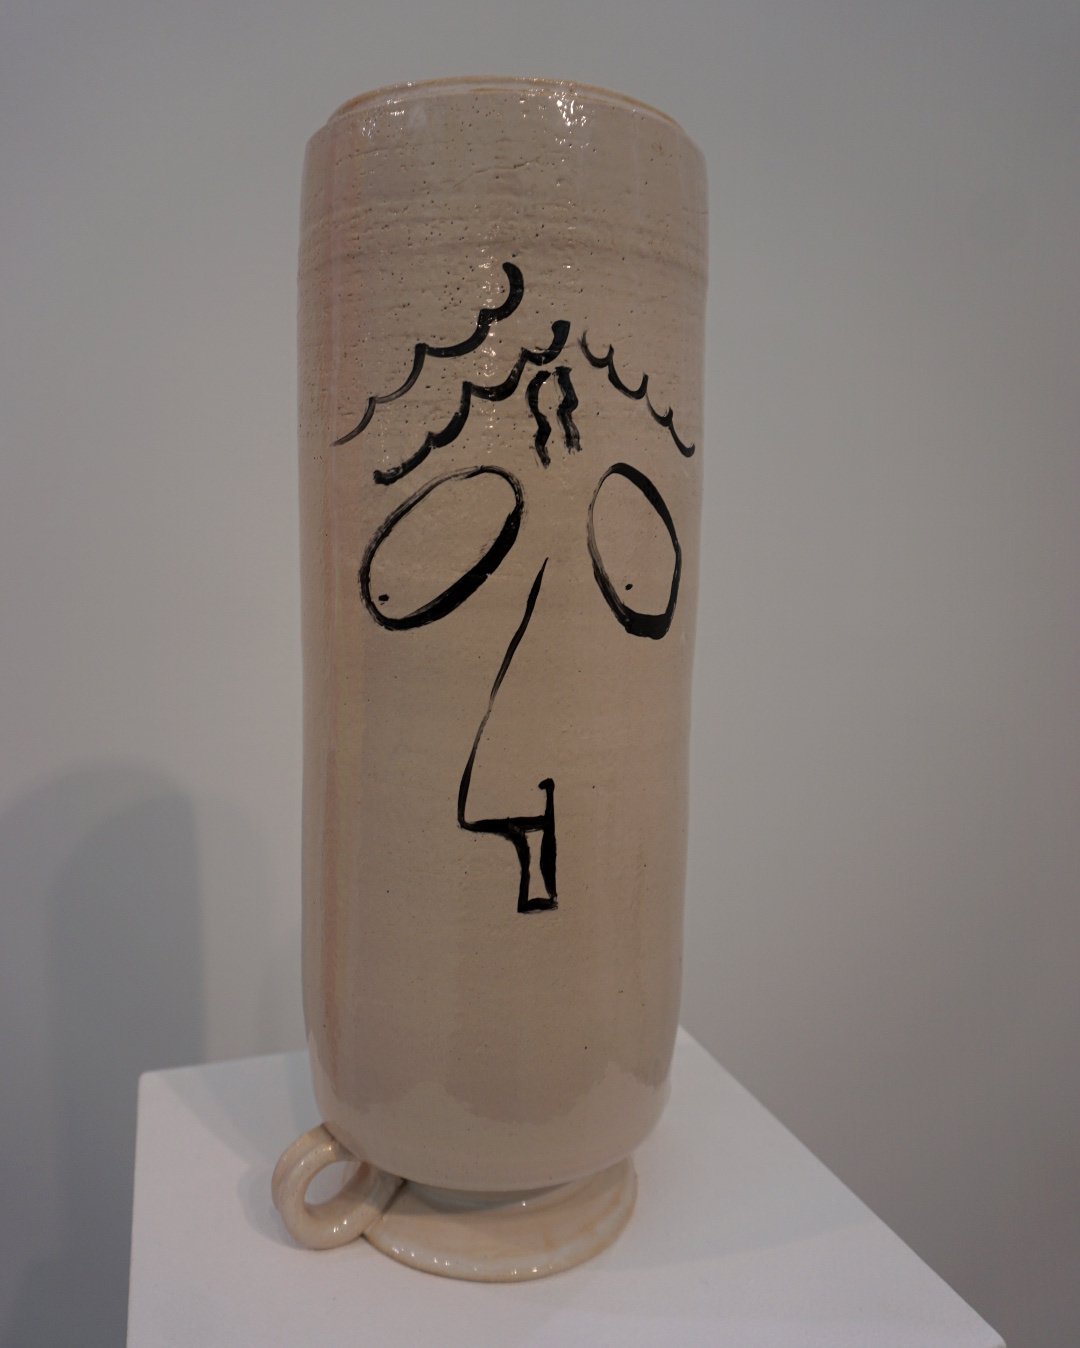 One of Judith Hopf's Exhausted Vases, at Deborah Schamoni's stand, the Frieze Art Fair, 2017